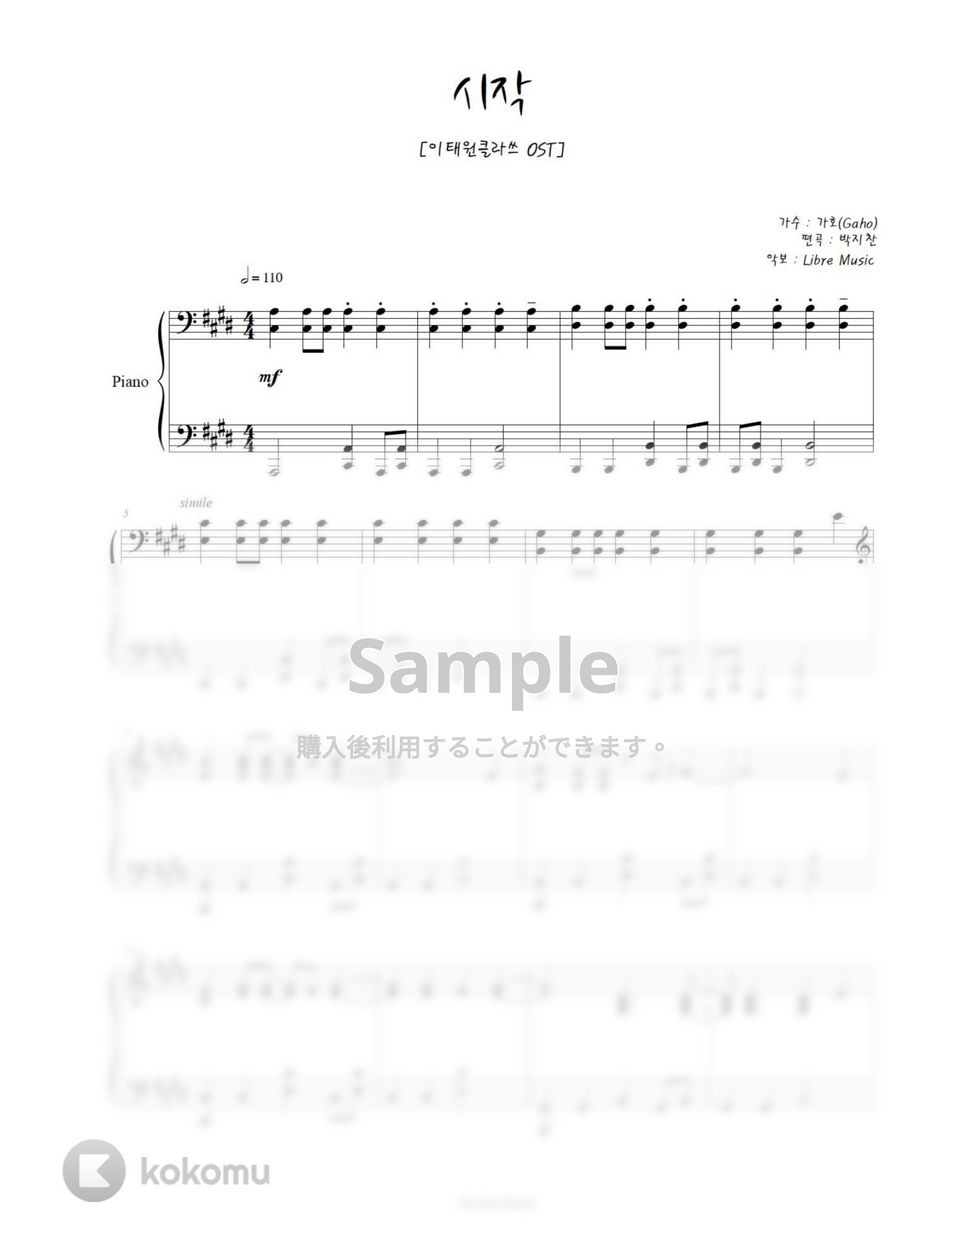 Gaho - 始まり(梨泰院クラス OST) by JichanPark